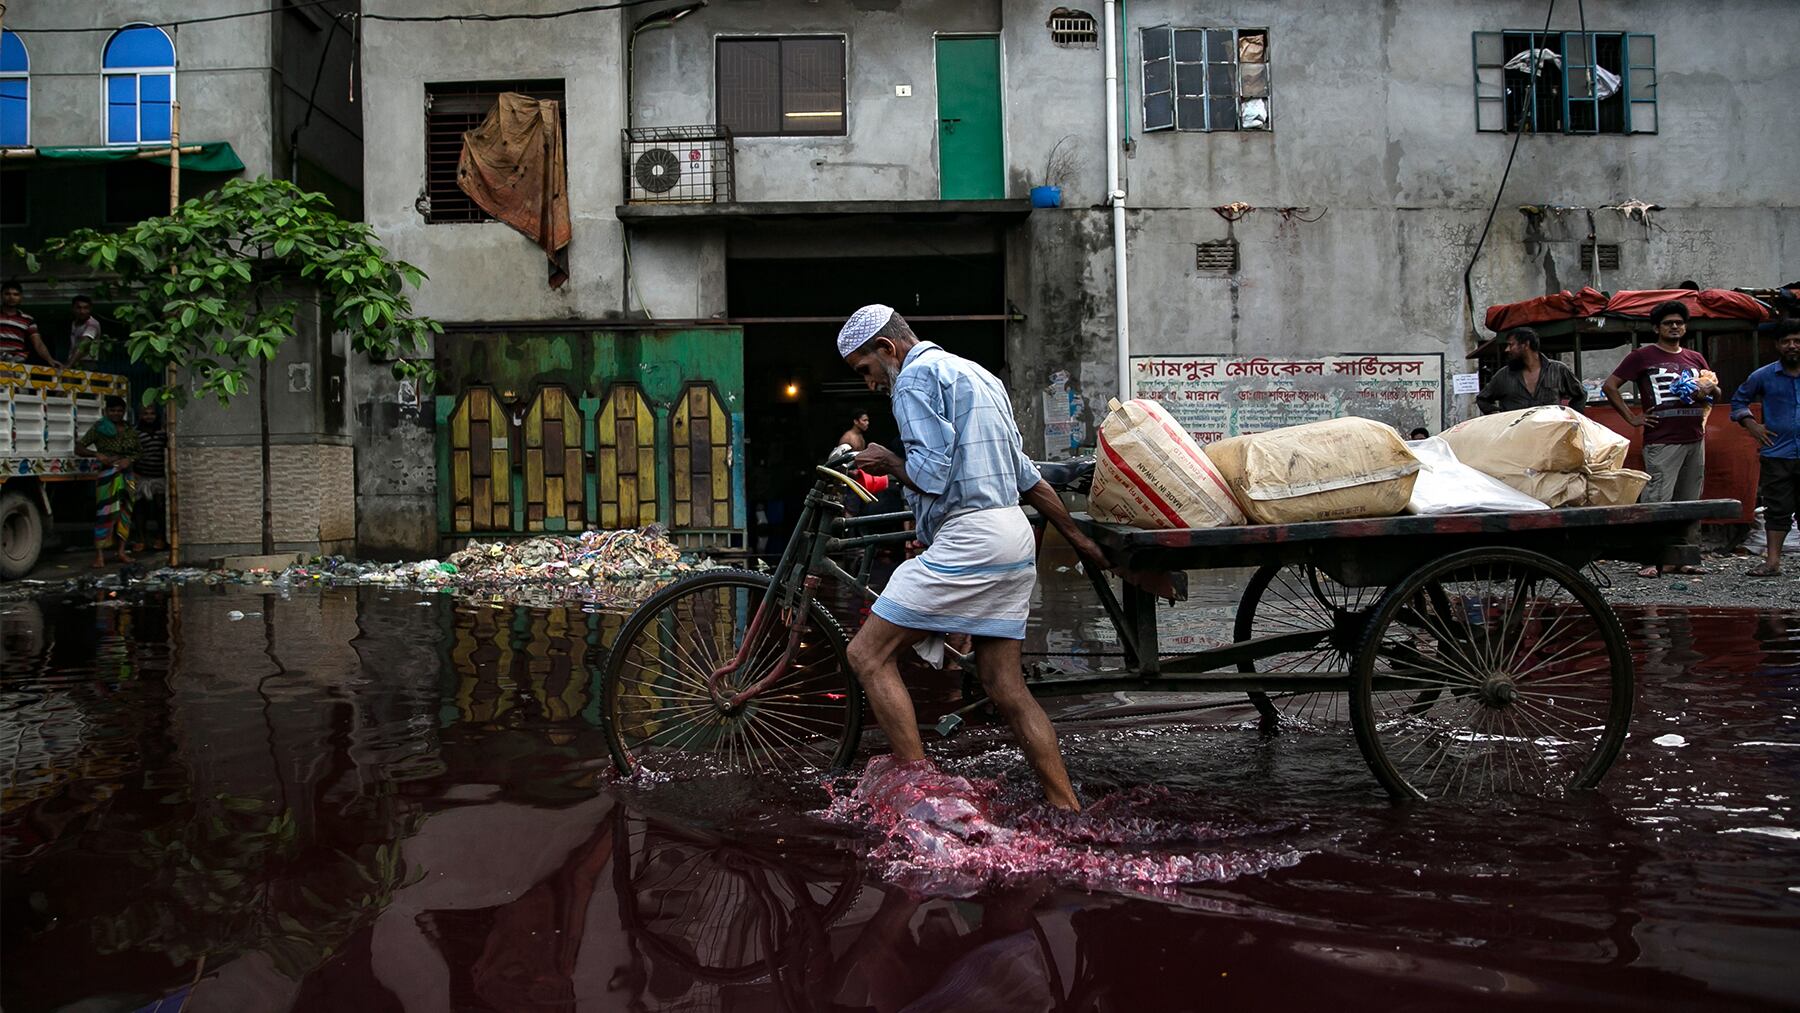 A man walks through rain and dye outside a dyeing factory in Bangladesh.